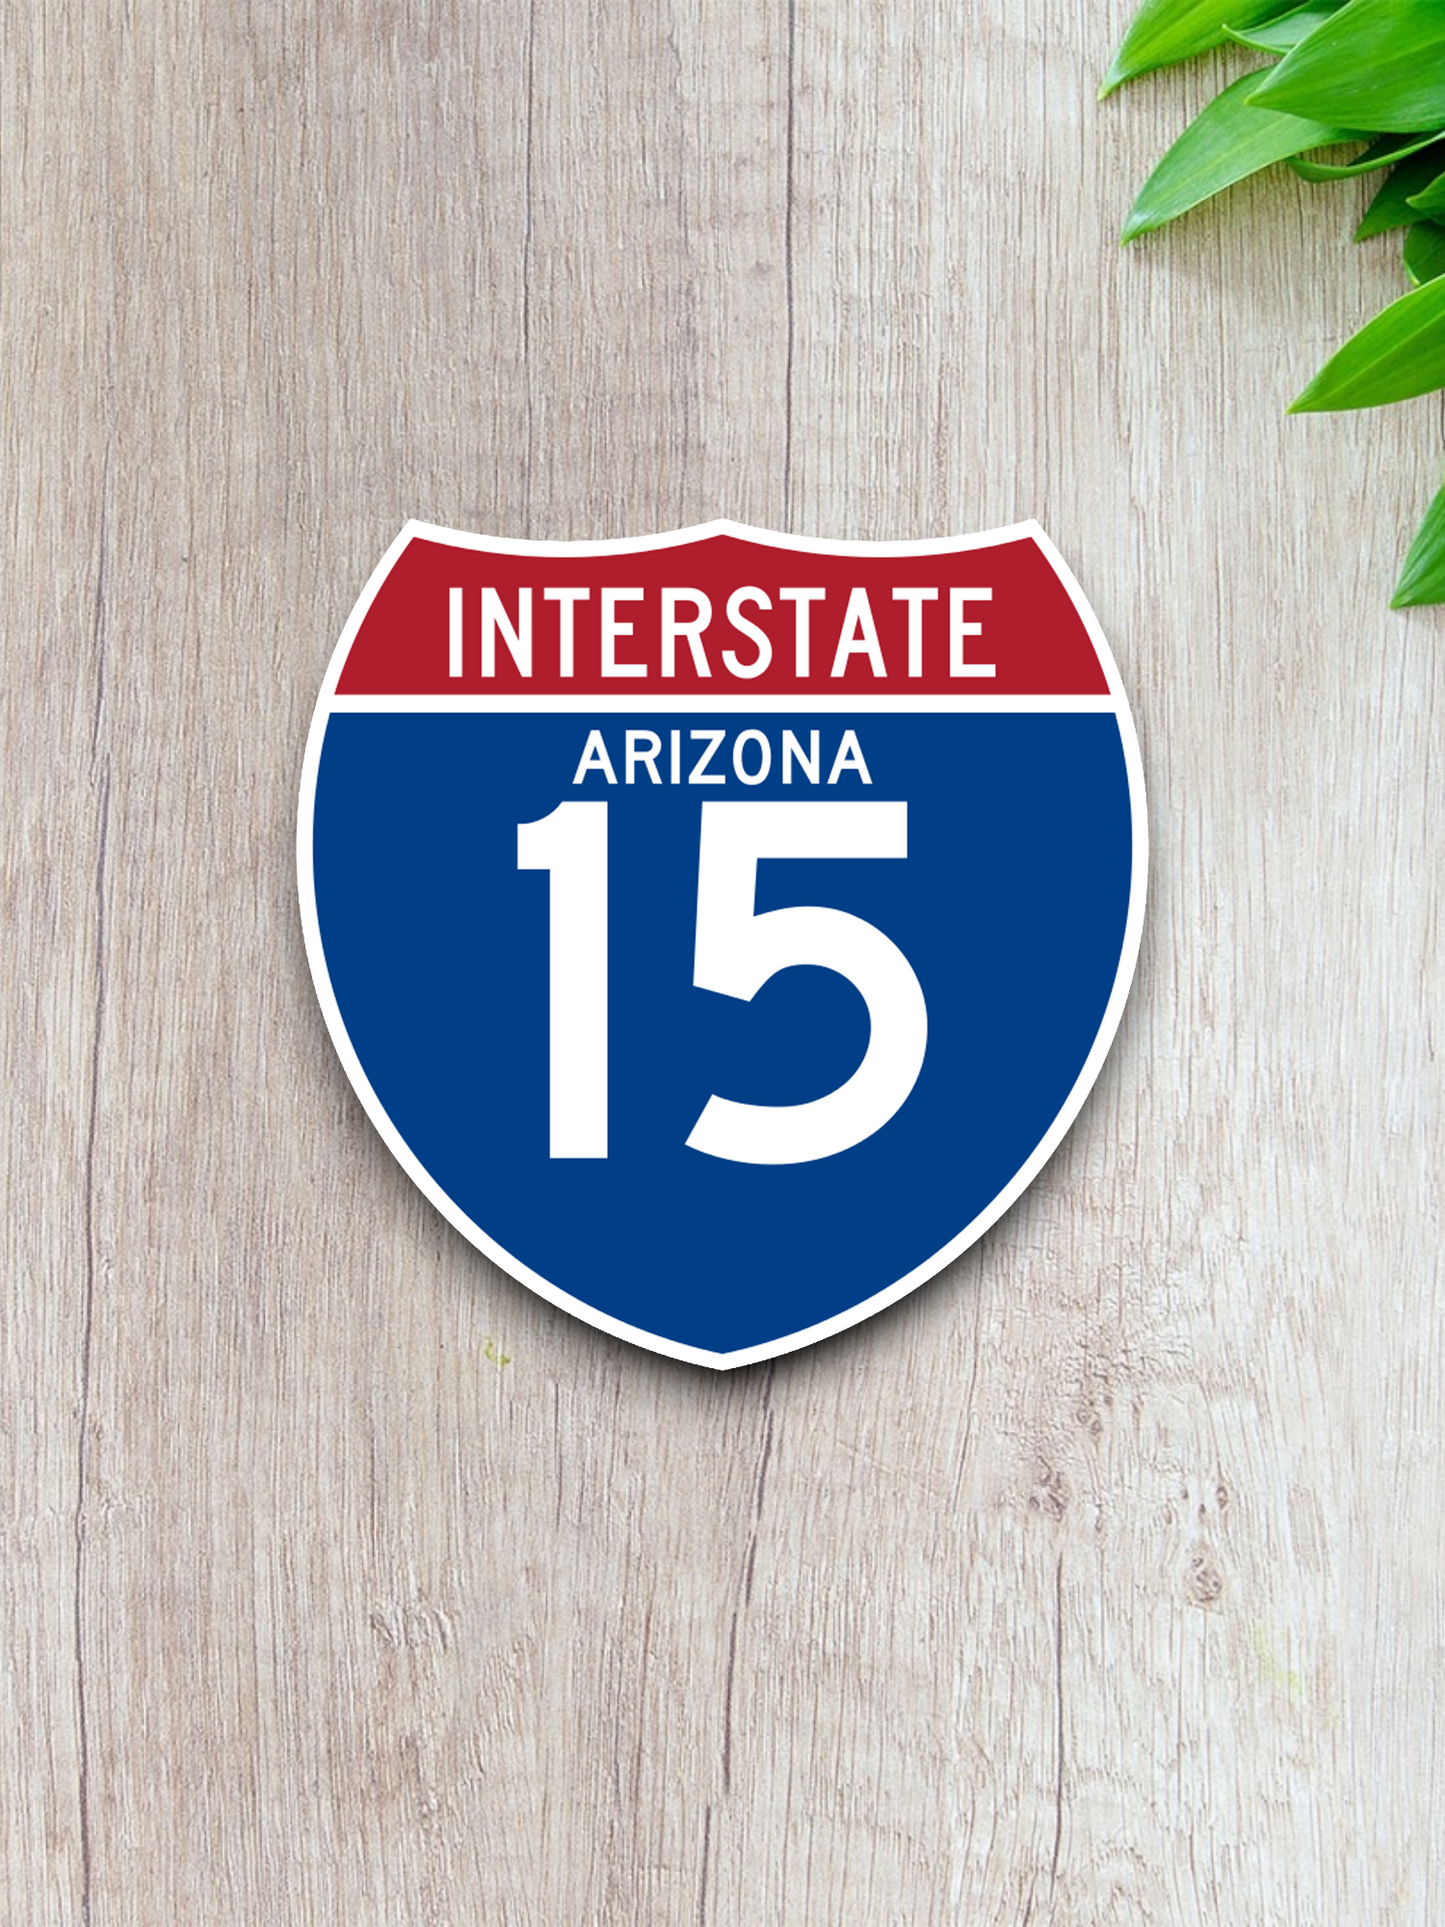 Interstate I-15 - Arizona - Road Sign Sticker